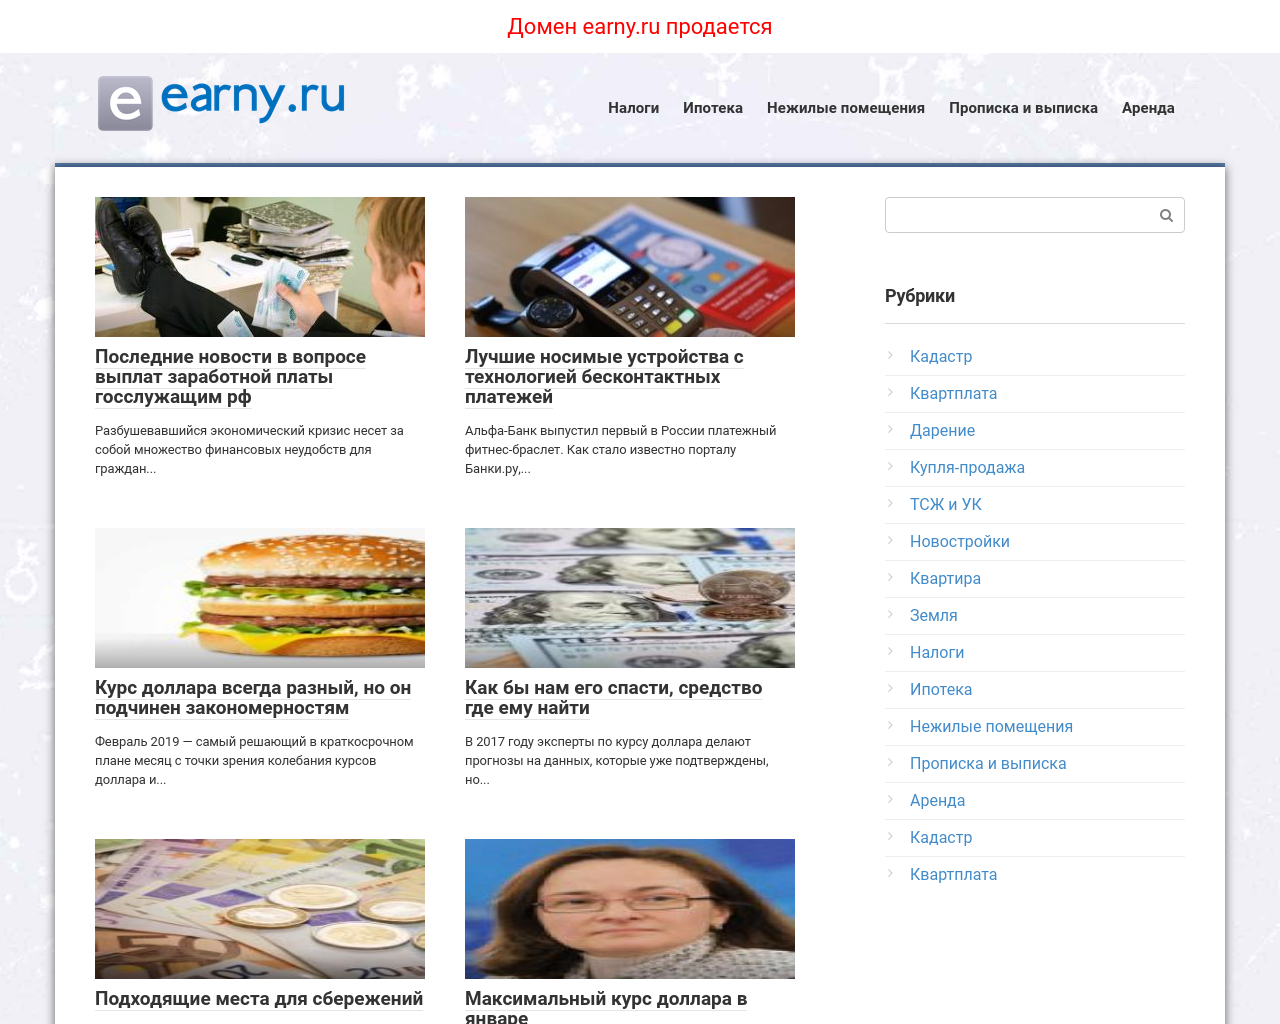 Изображение сайта earny.ru в разрешении 1280x1024